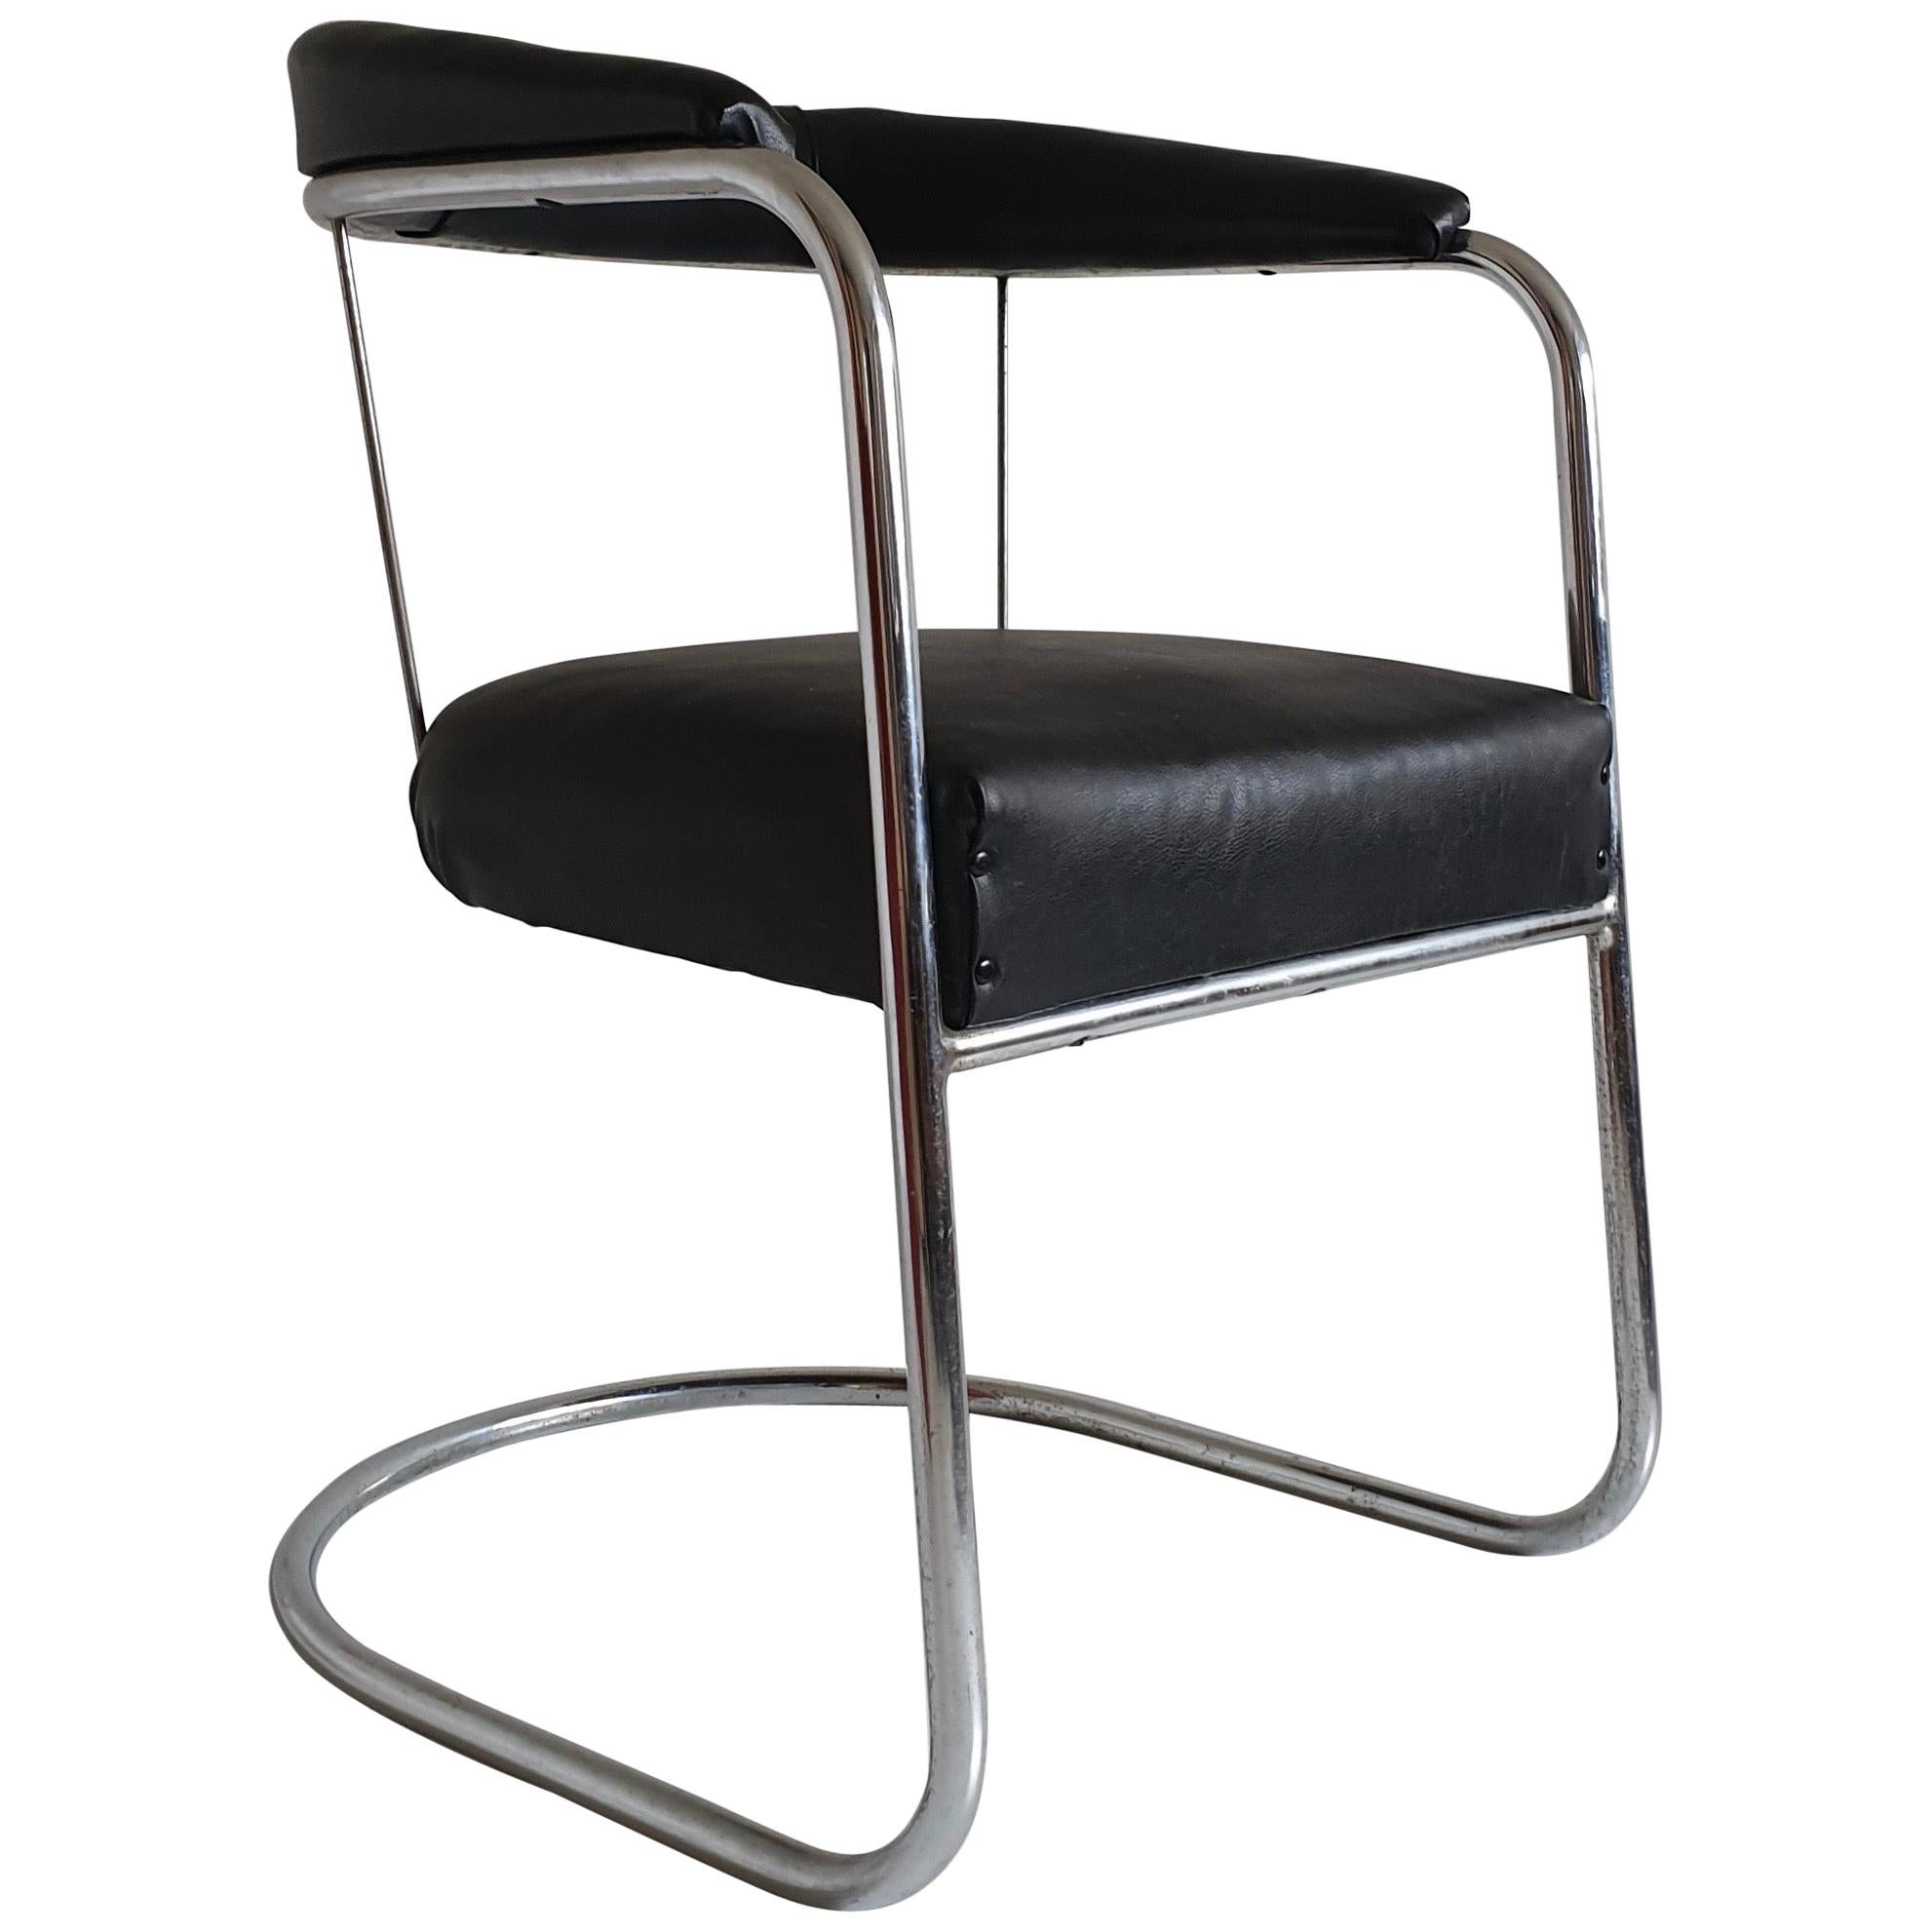 Tubular Chrome & Black Leatherette Bauhaus Style Chair by PEL, England